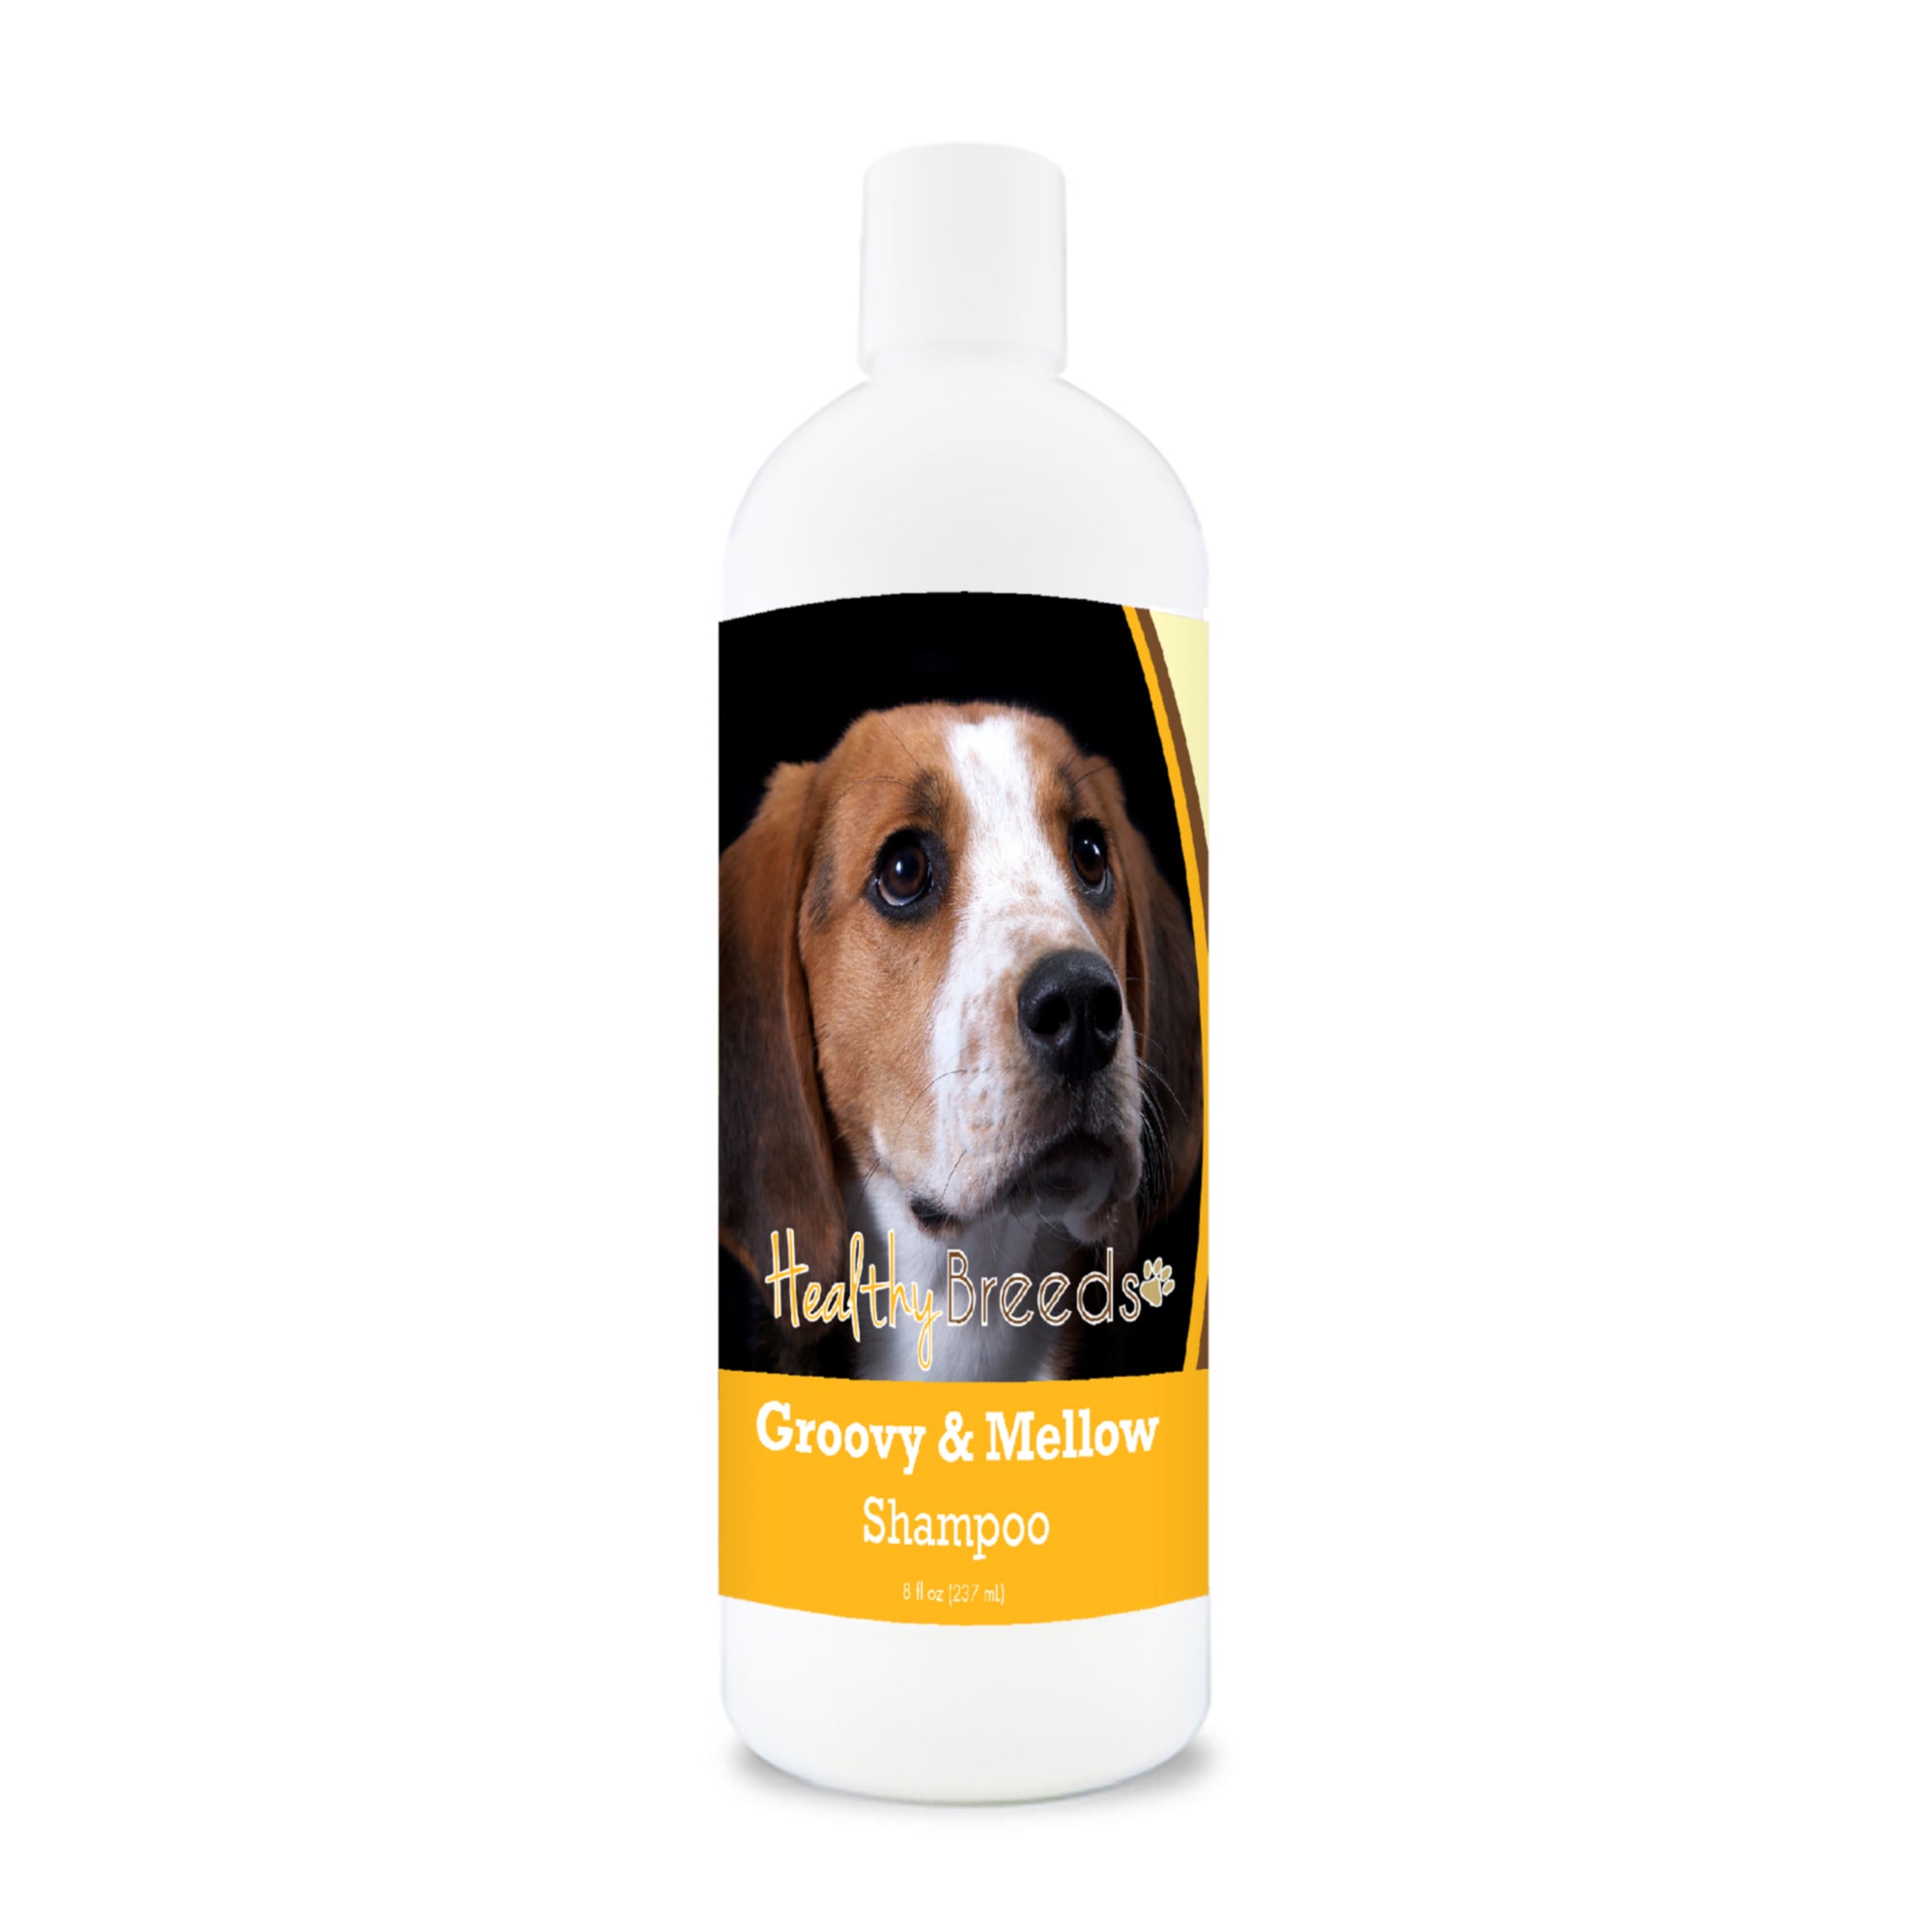 American English Coonhound Groovy & Mellow Shampoo 8 oz